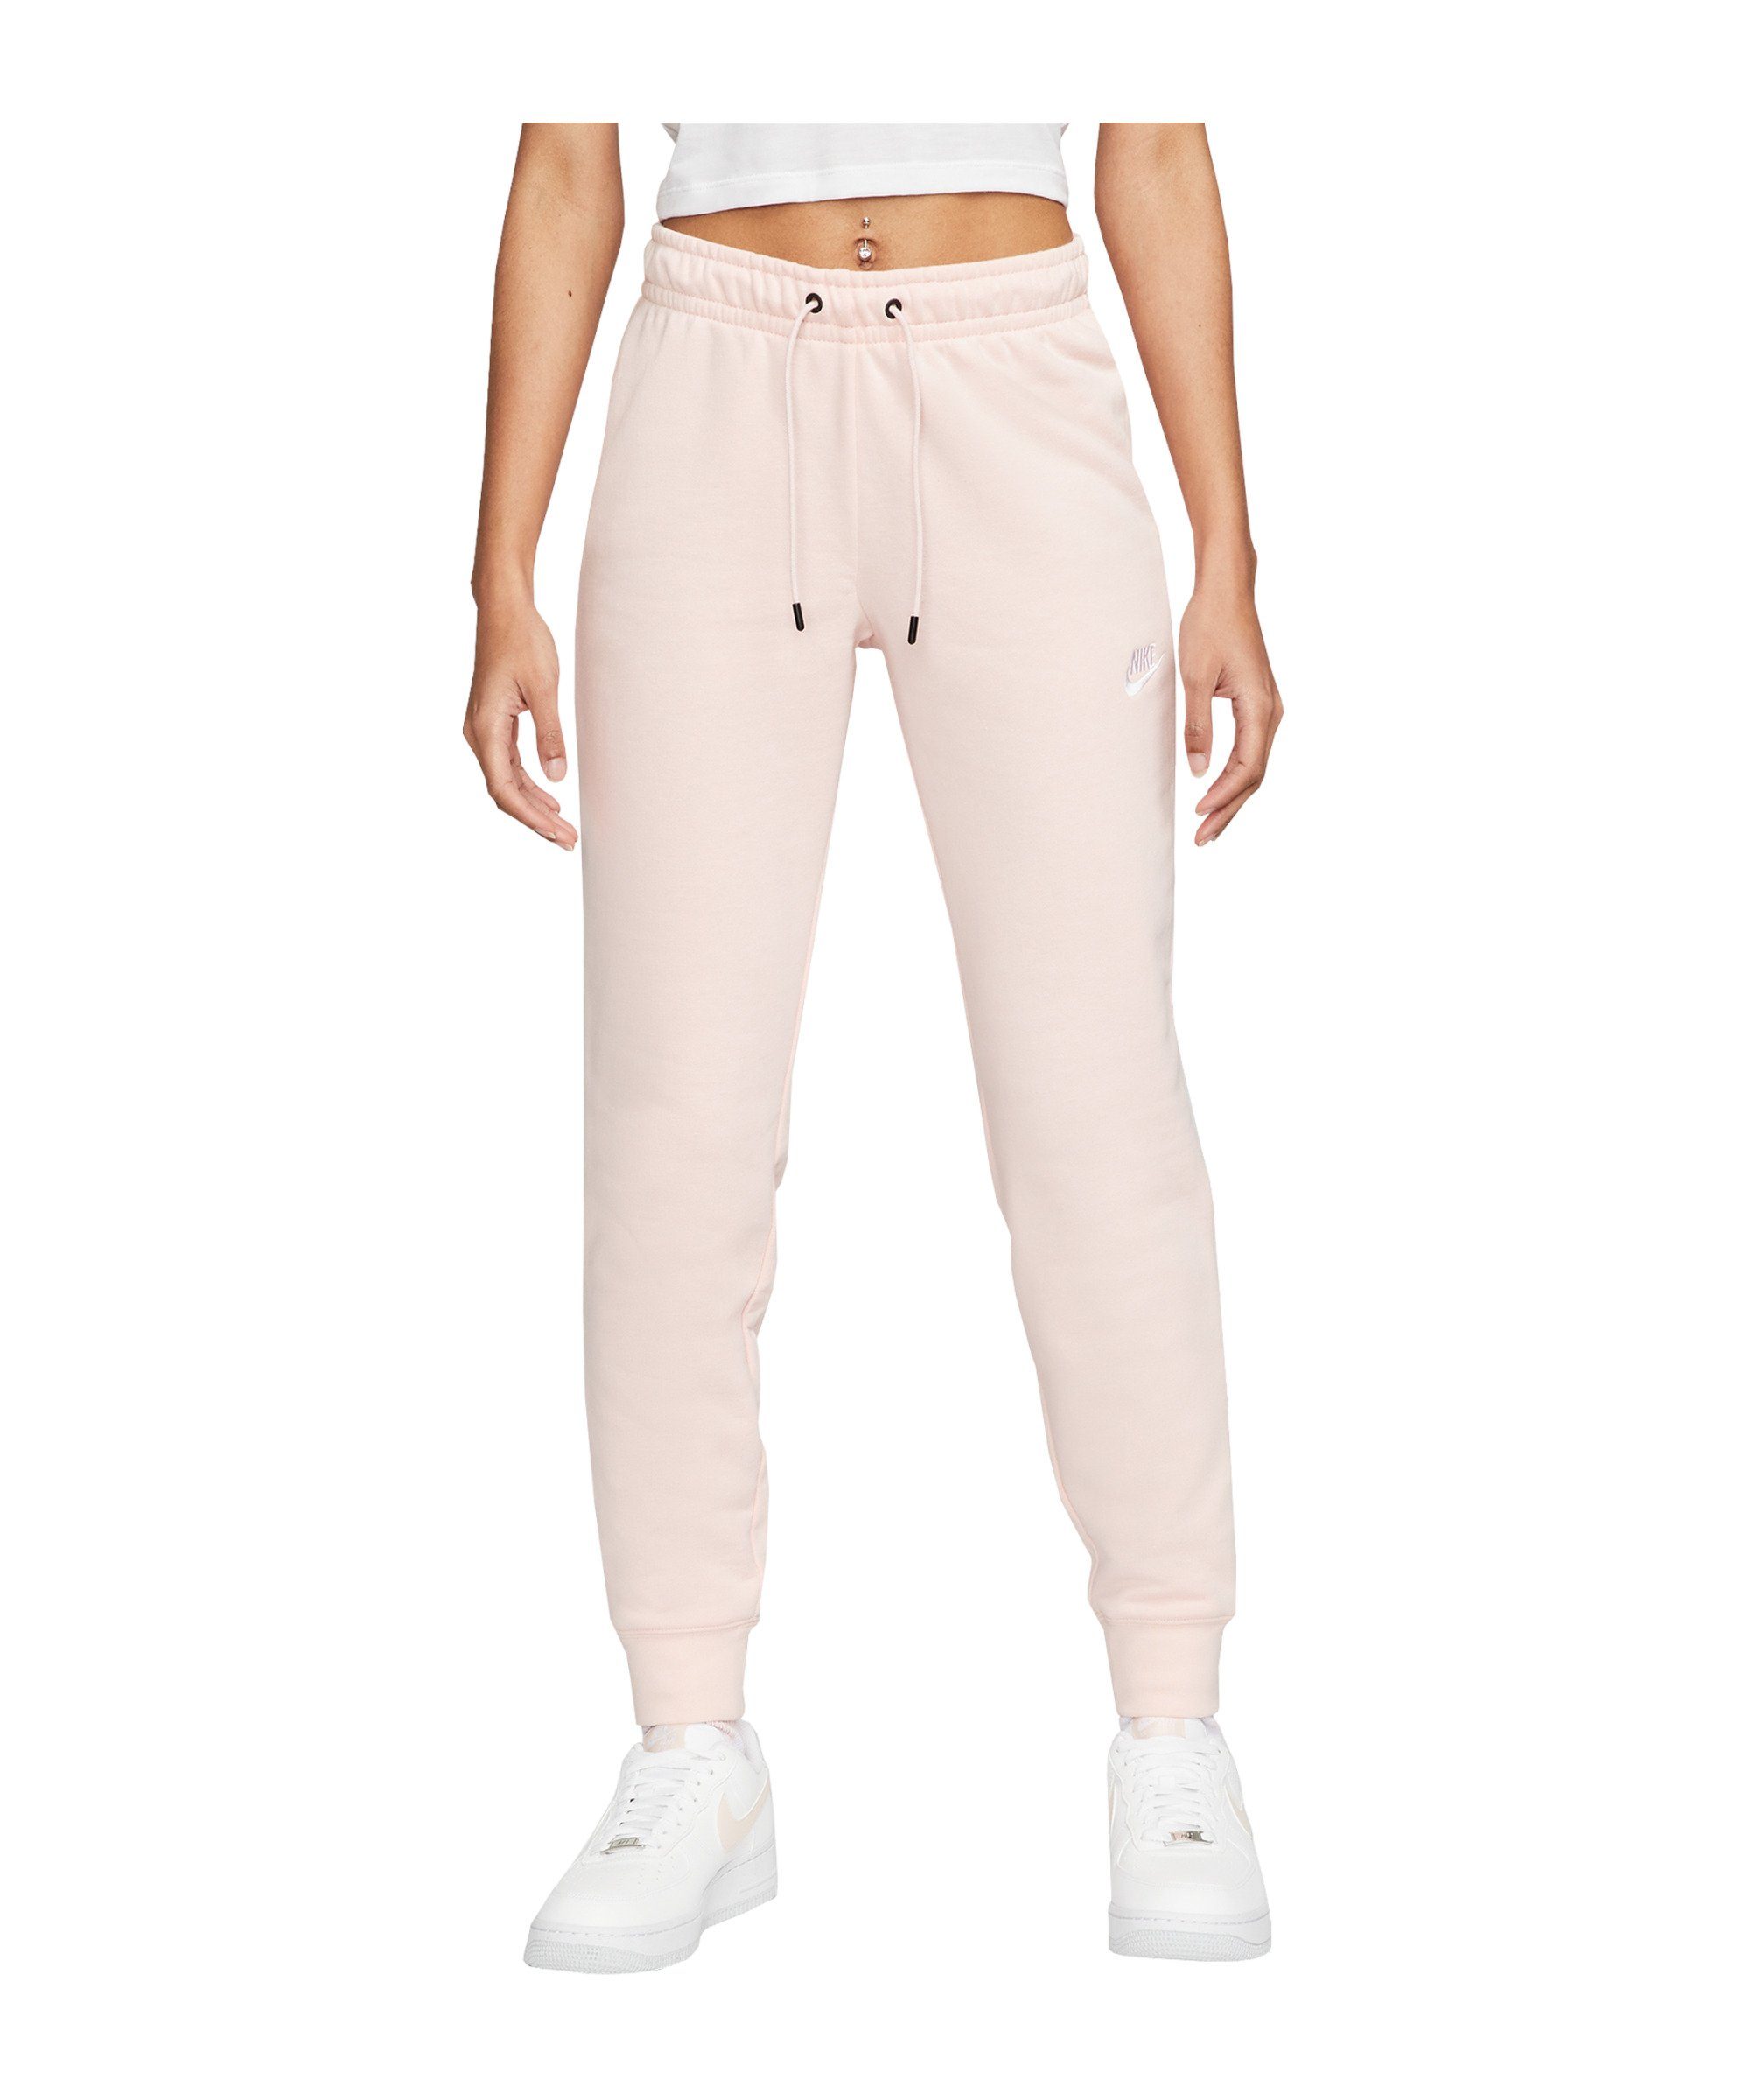 Rosa Nike Hosen für Damen kaufen » Pinke Nike Hosen | OTTO